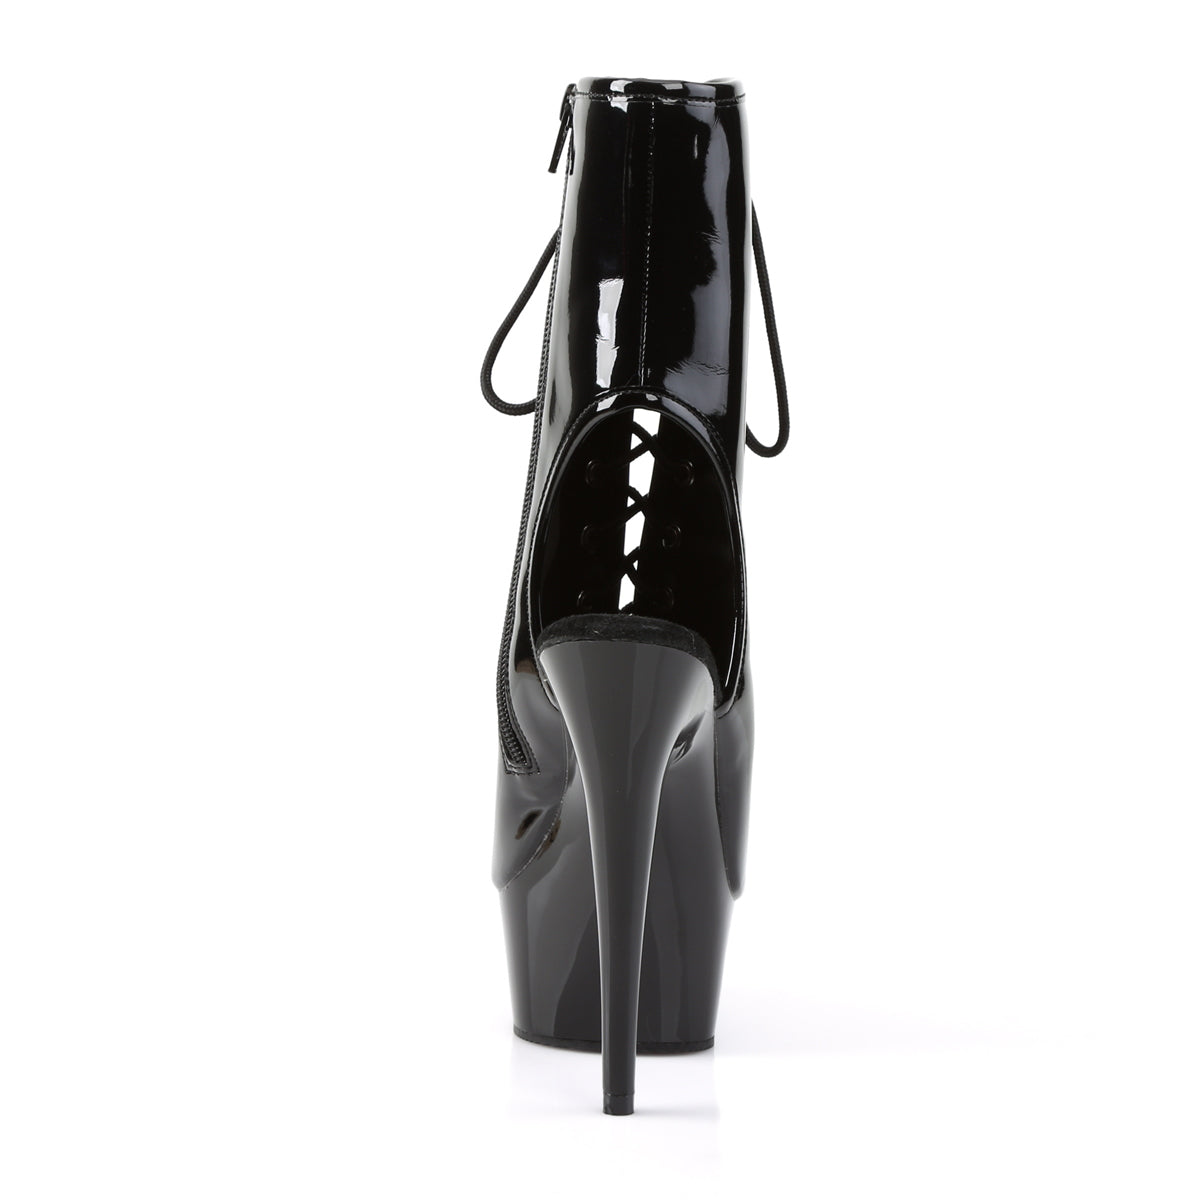 DELIGHT-1016 6 Inch Heel Black Patent Pole Dancing Platforms-Pleaser- Sexy Shoes Fetish Footwear